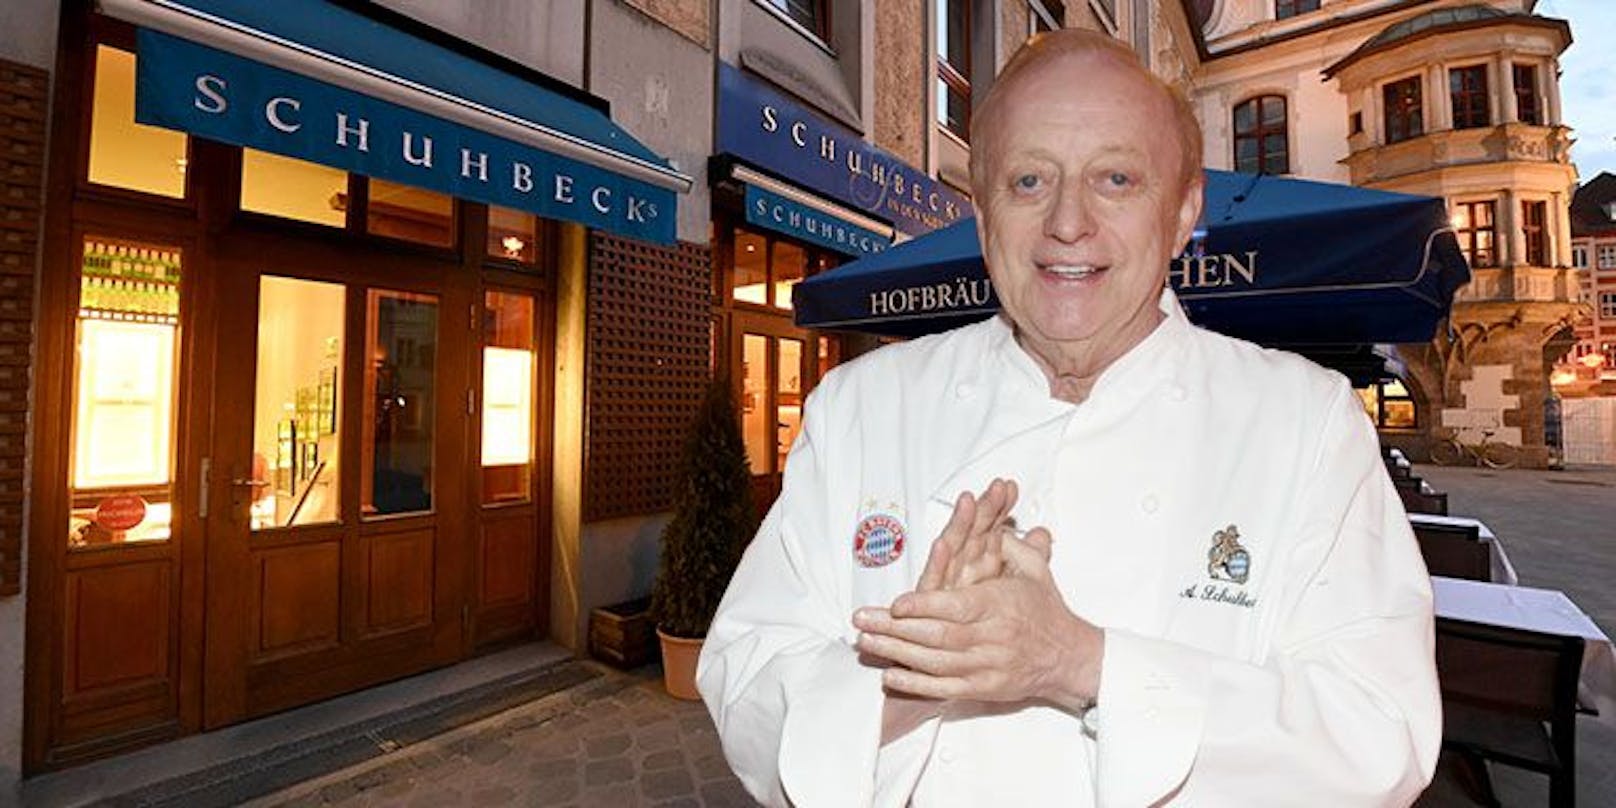 Star-Koch Alfons Schuhbeck vor seinem Restaurant "Südtiroler Stuben" am Münchner Platzl